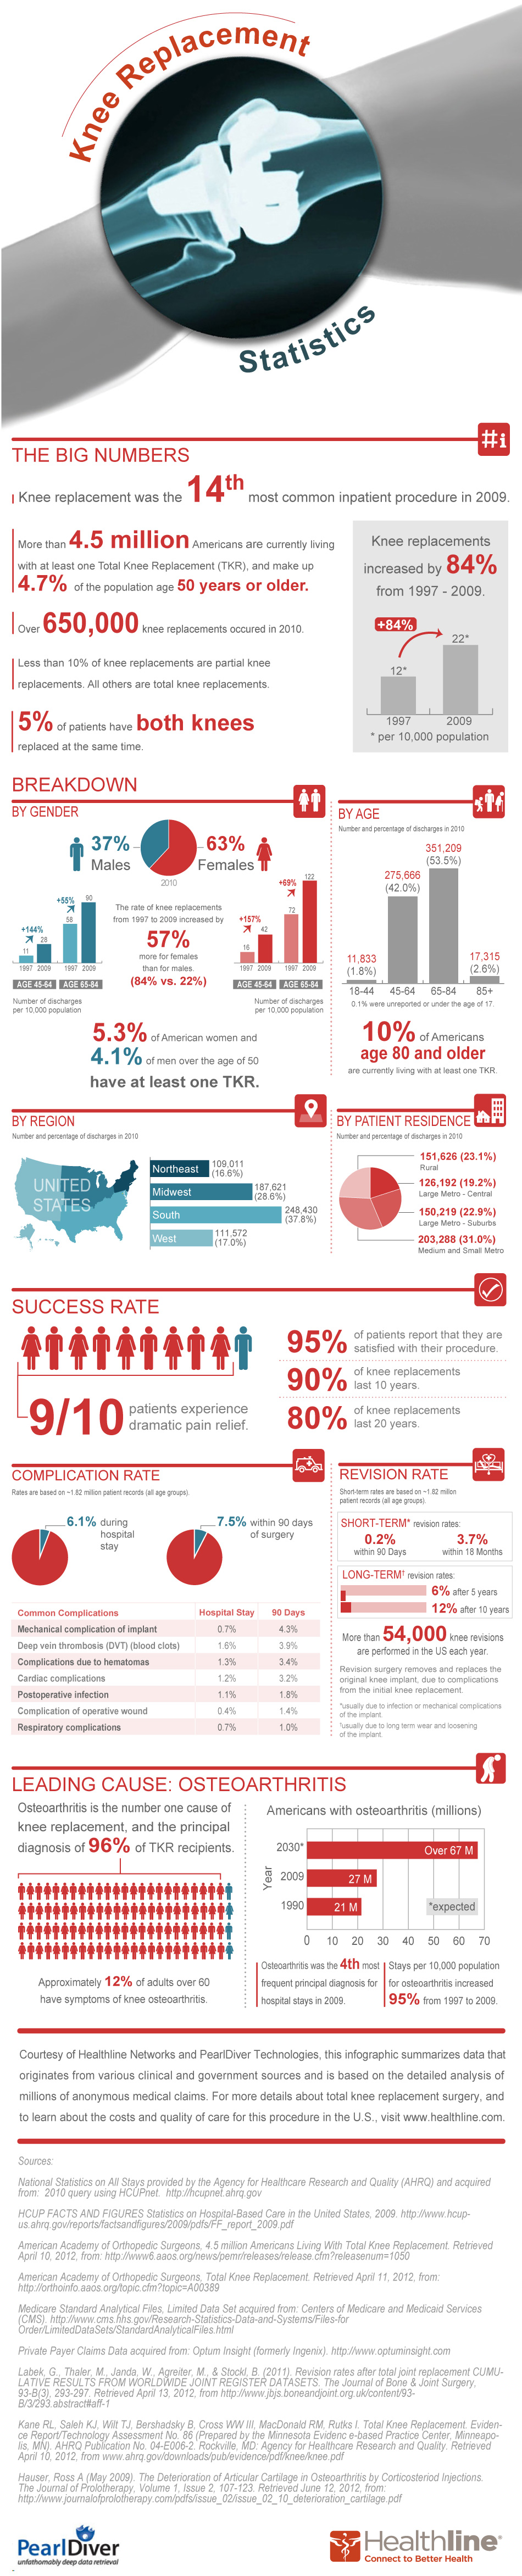 Knee Replacement Statistics Infographic